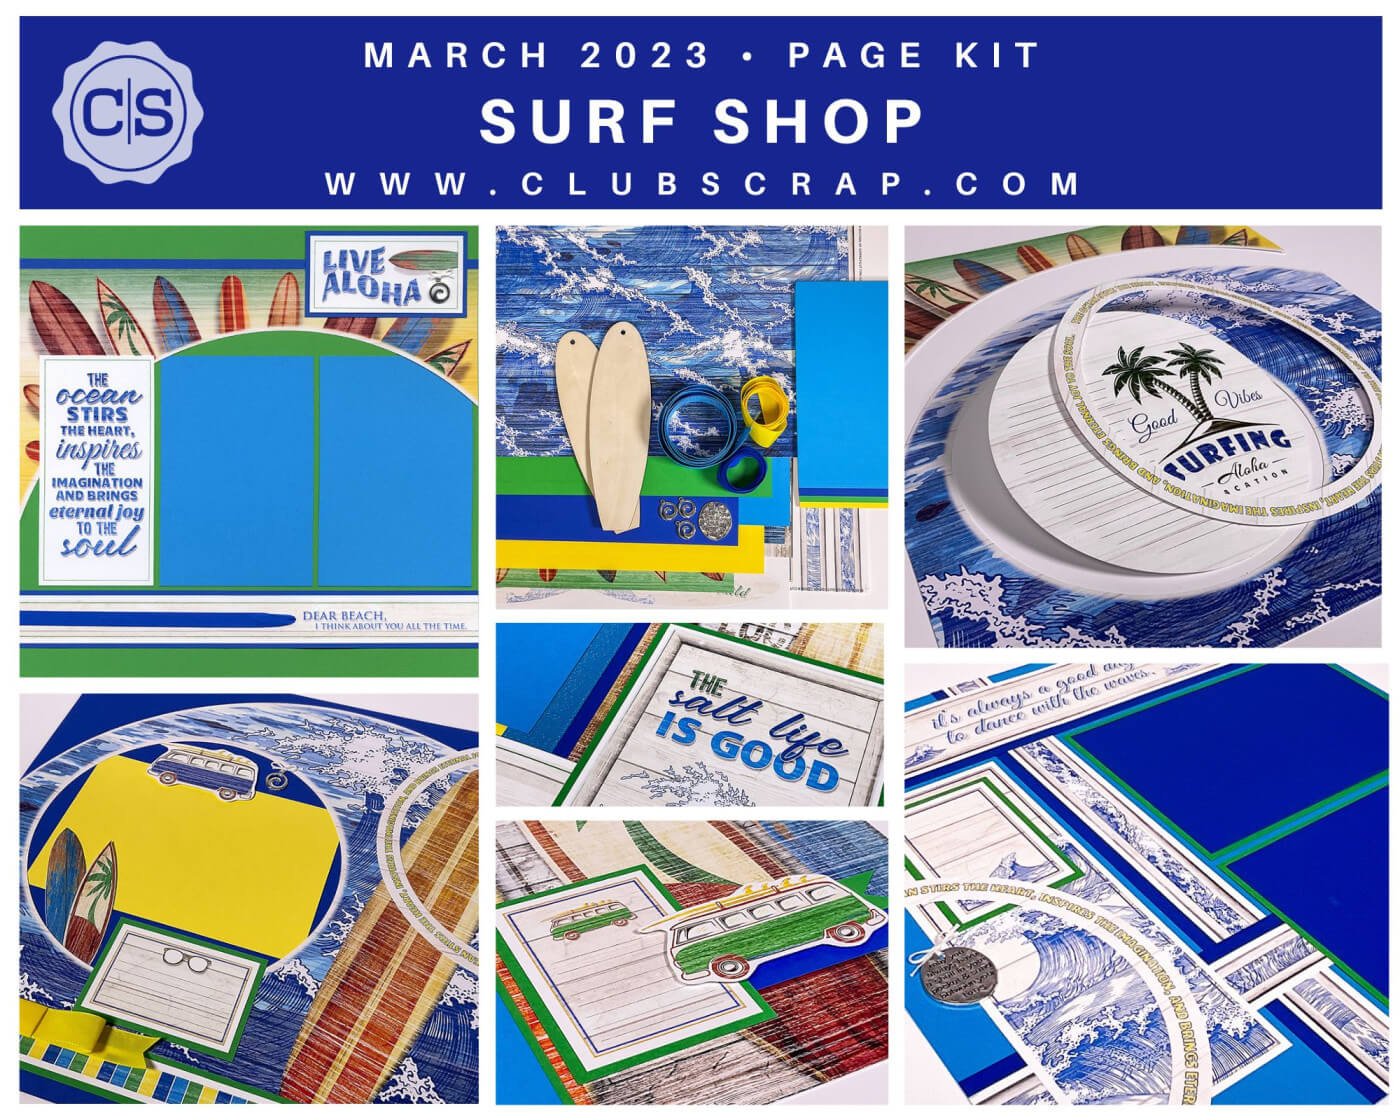 Surf Shop Page Kit Spoiler